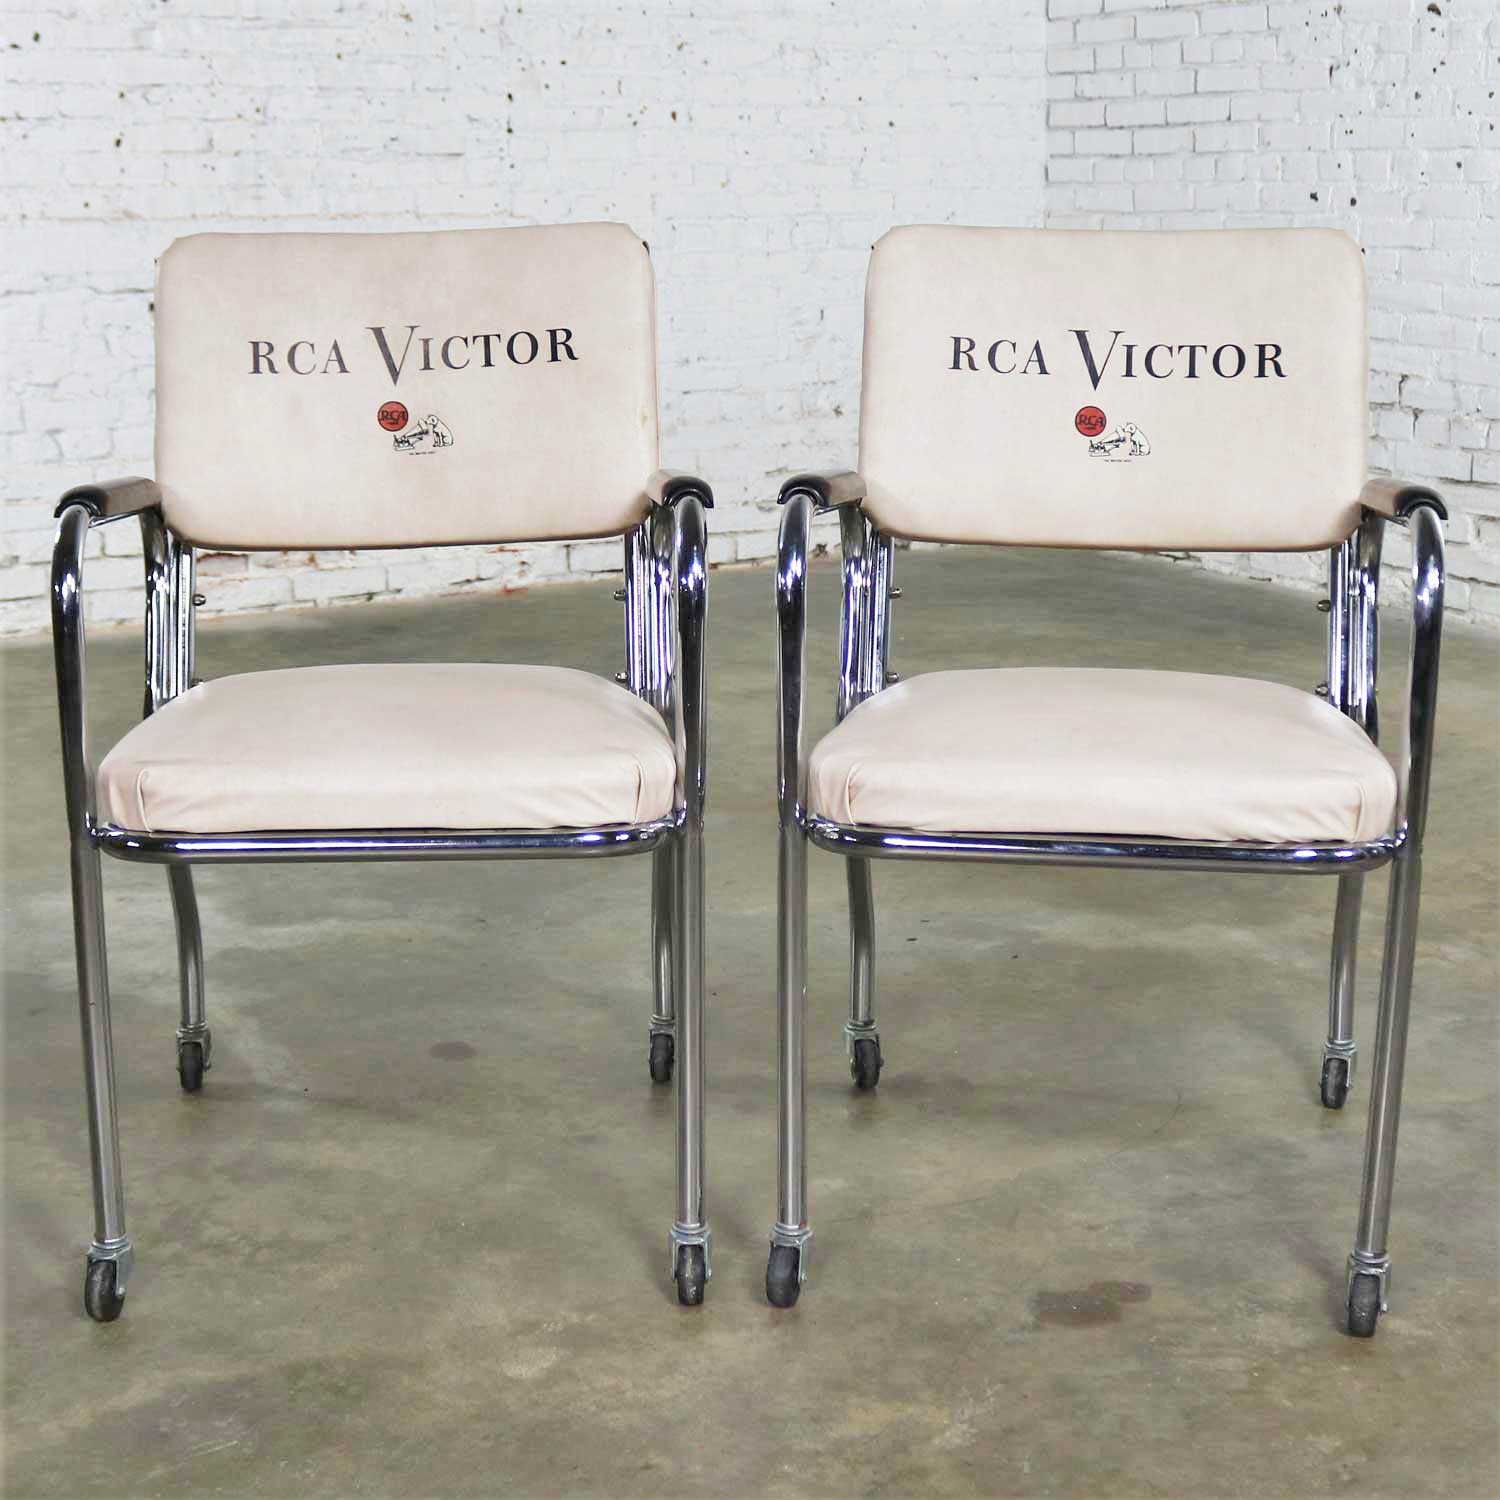 Vintage Pair Art Deco Streamline Modern RCA Victor Advertising Chairs by Chromcraft